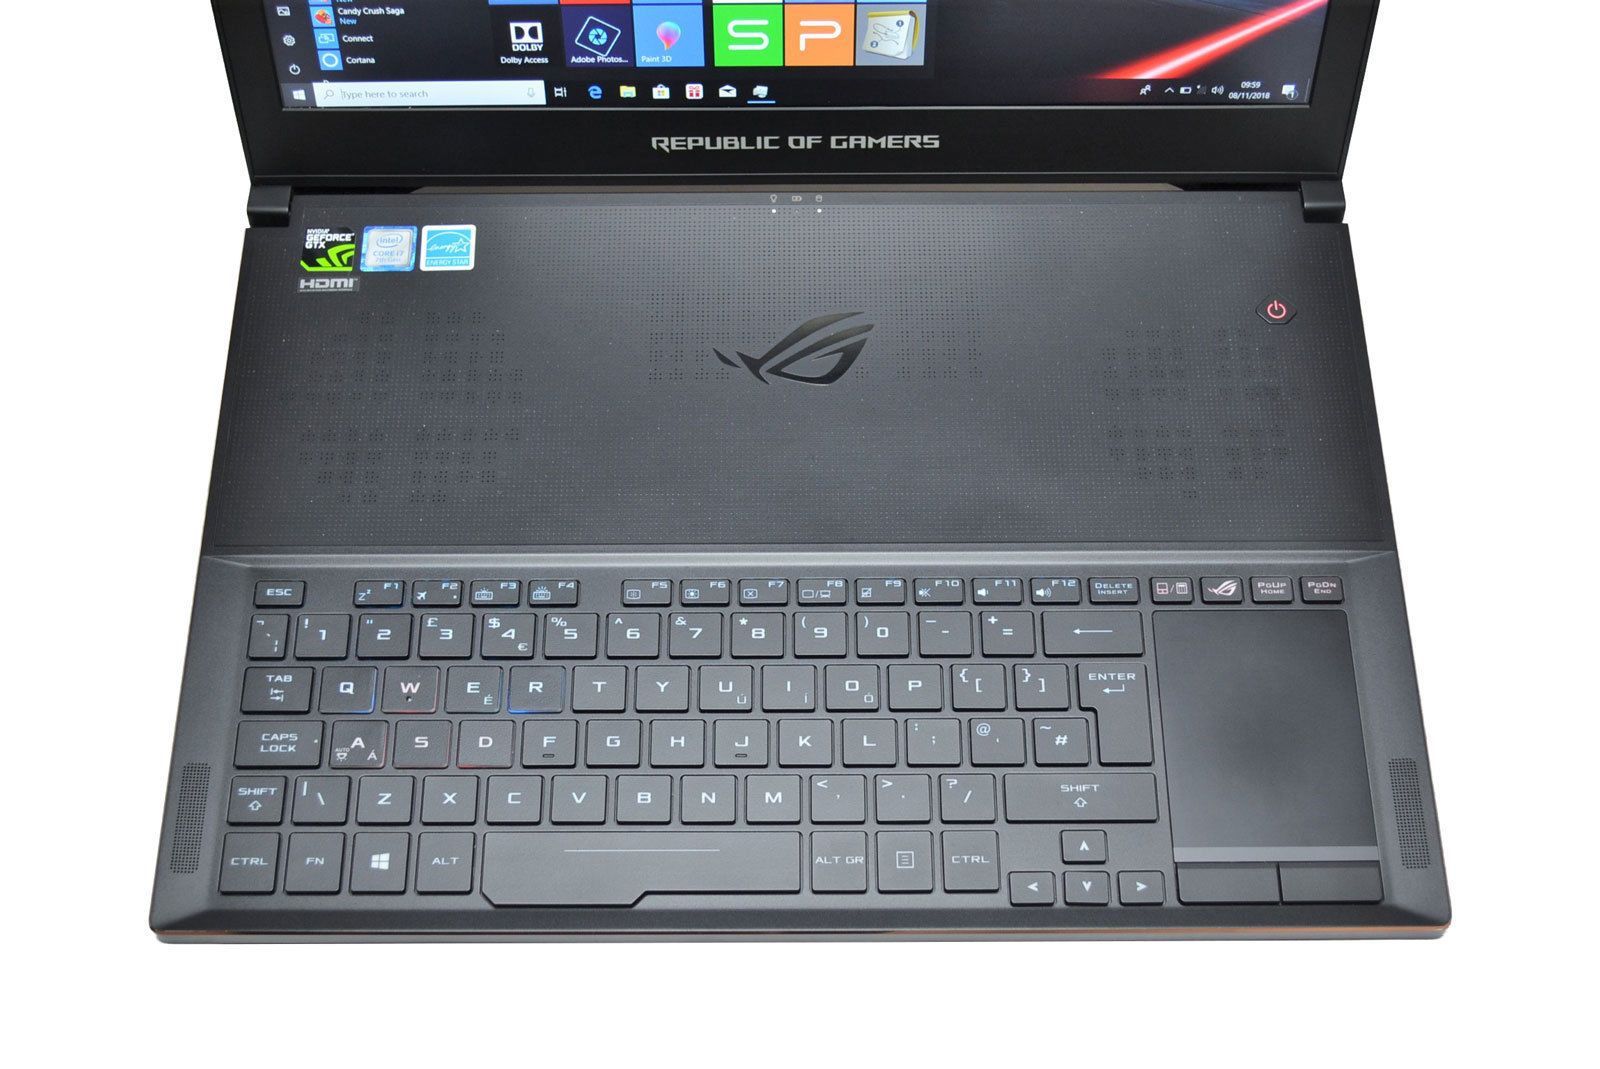 ASUS ROG Zephyrus GX501 Gaming Laptop: GTX 1070, Core i7-7700HQ, 512GB, 16GB - CruiseTech